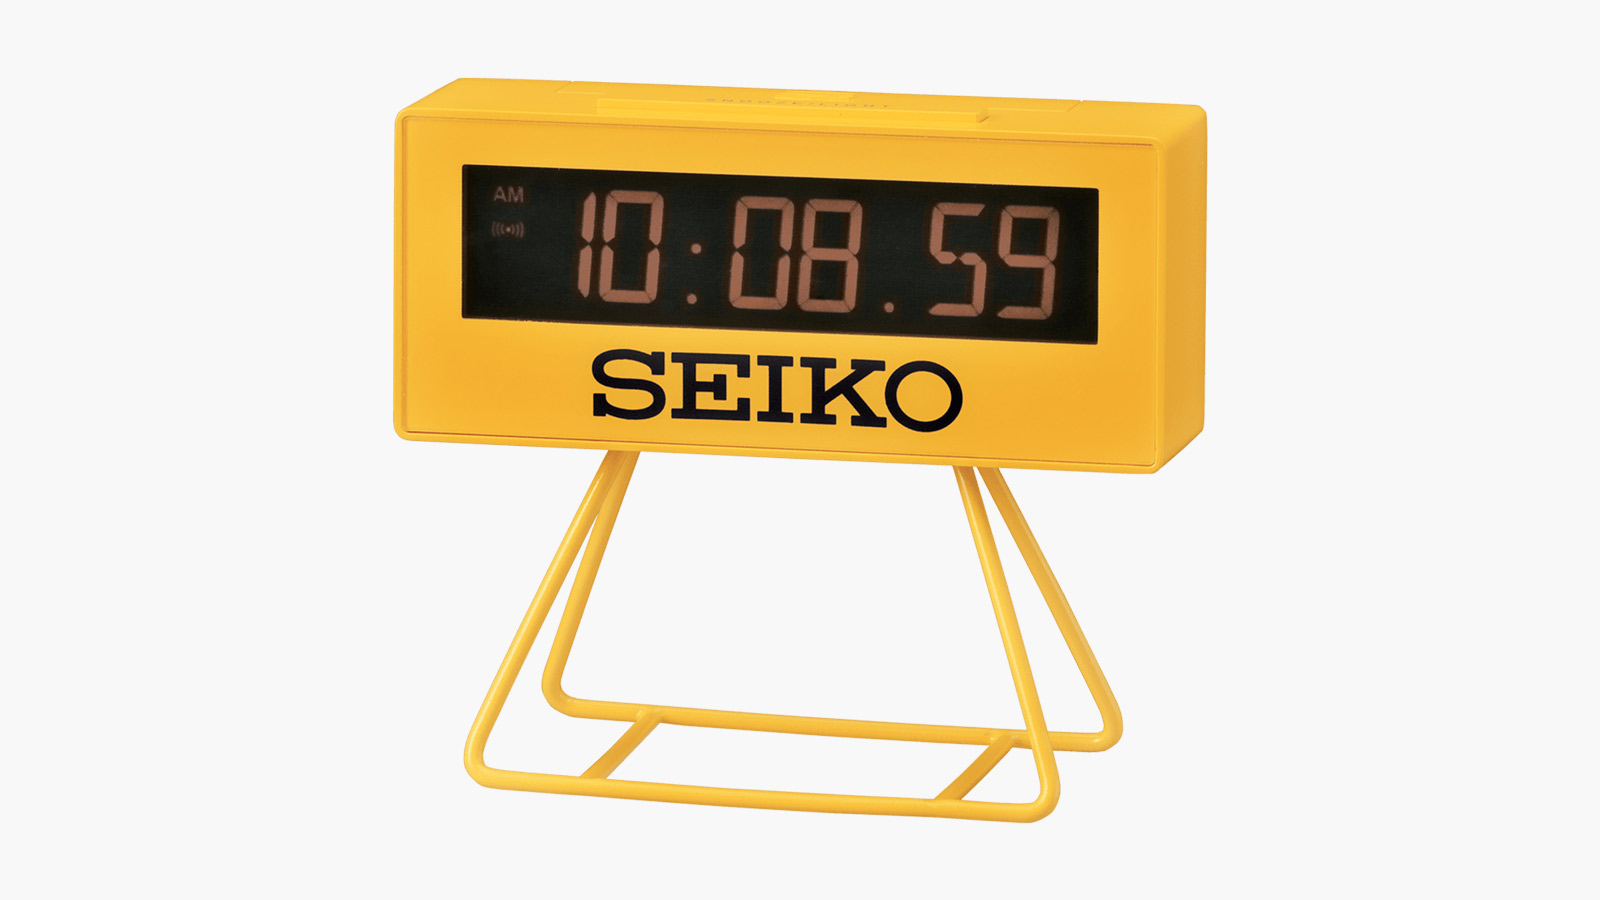 Seiko Victory Limited Edition Marathon Alarm Clock